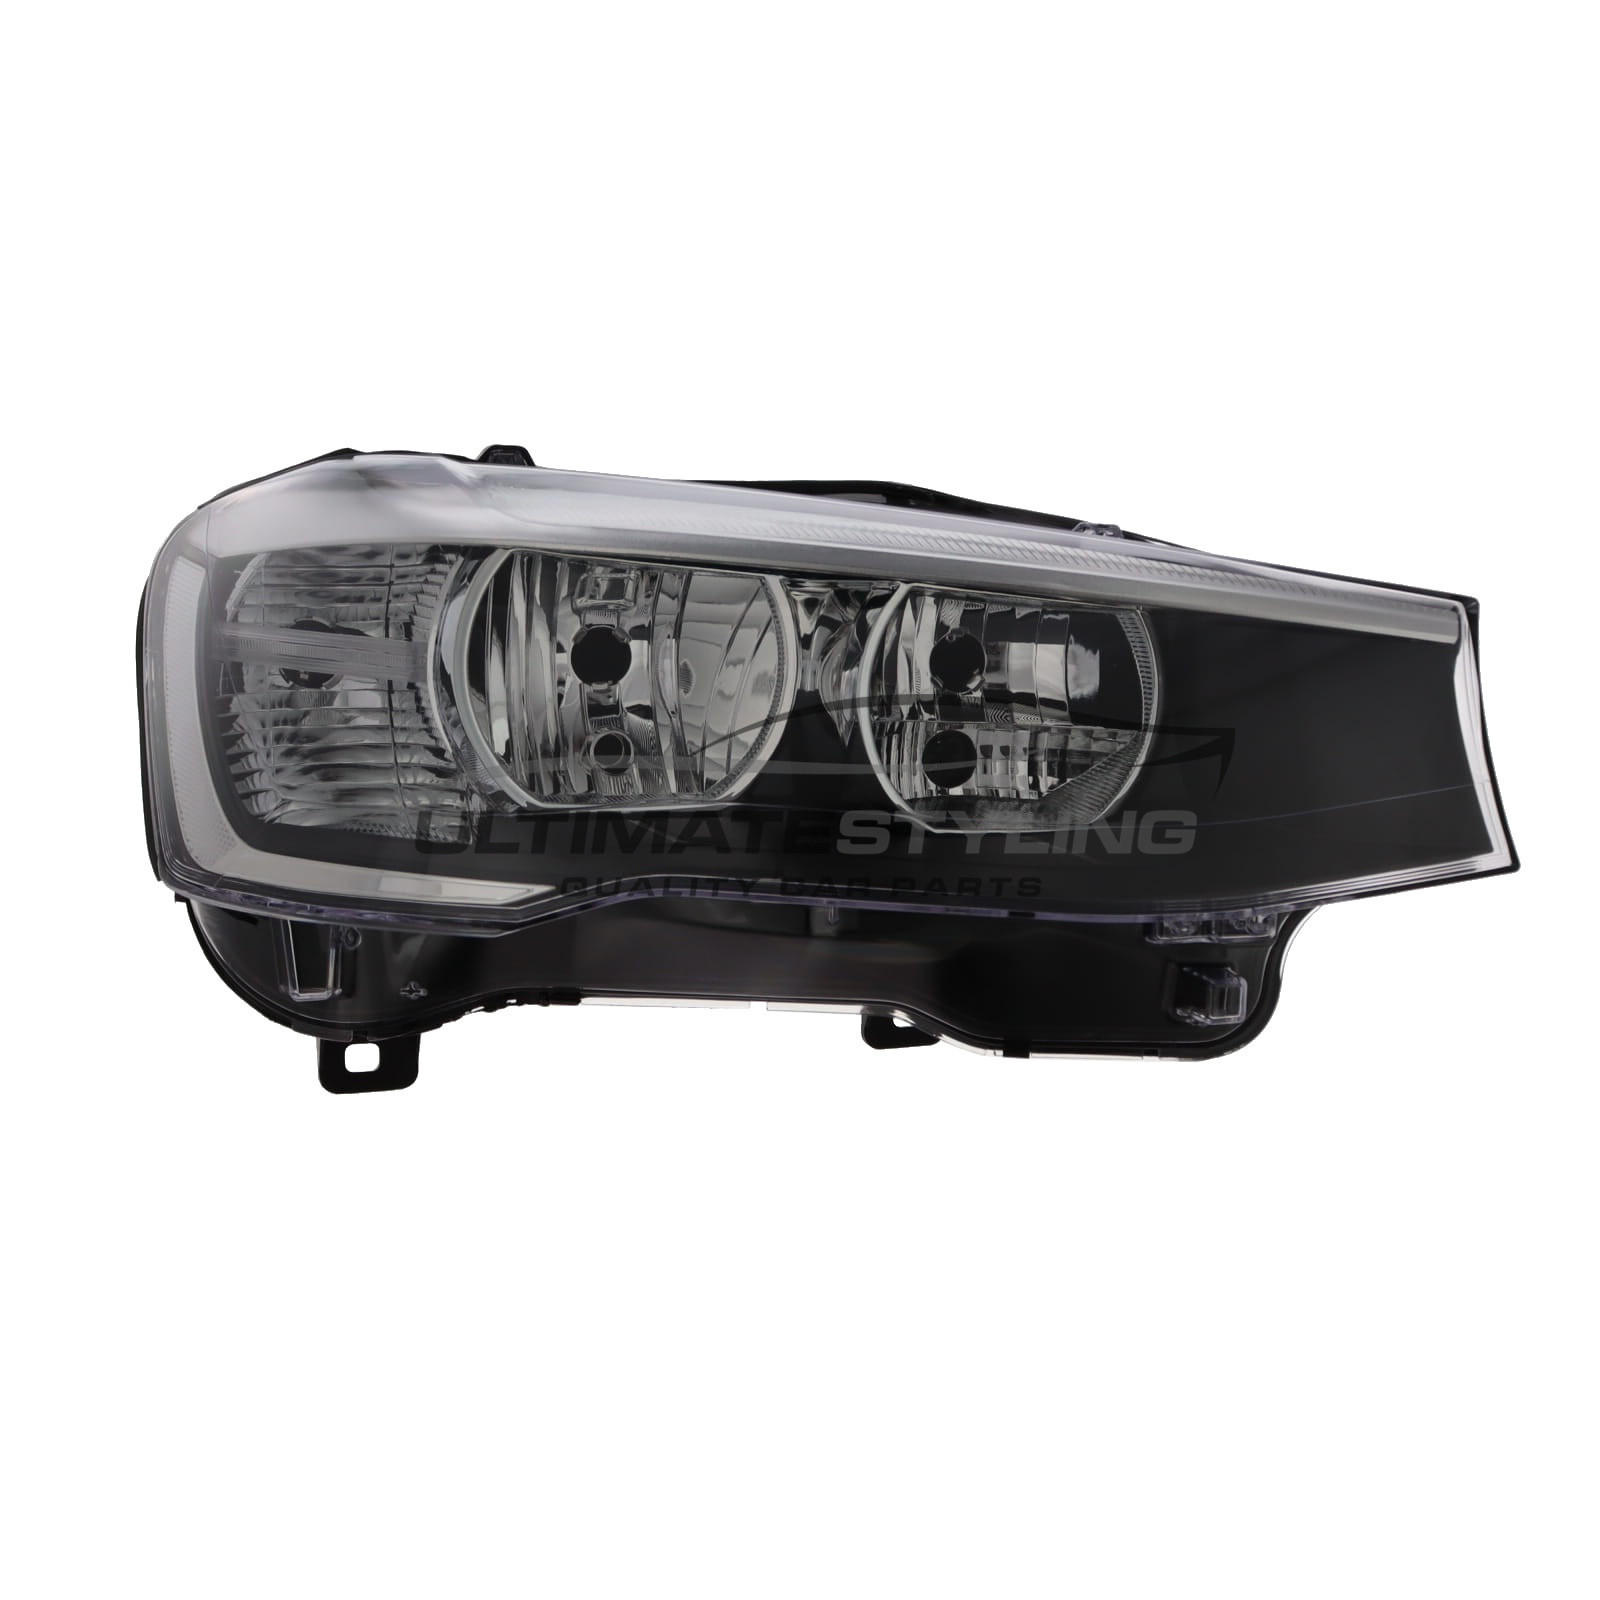 BMW X3 / X4 Headlight / Headlamp - Drivers Side (RH) - Halogen